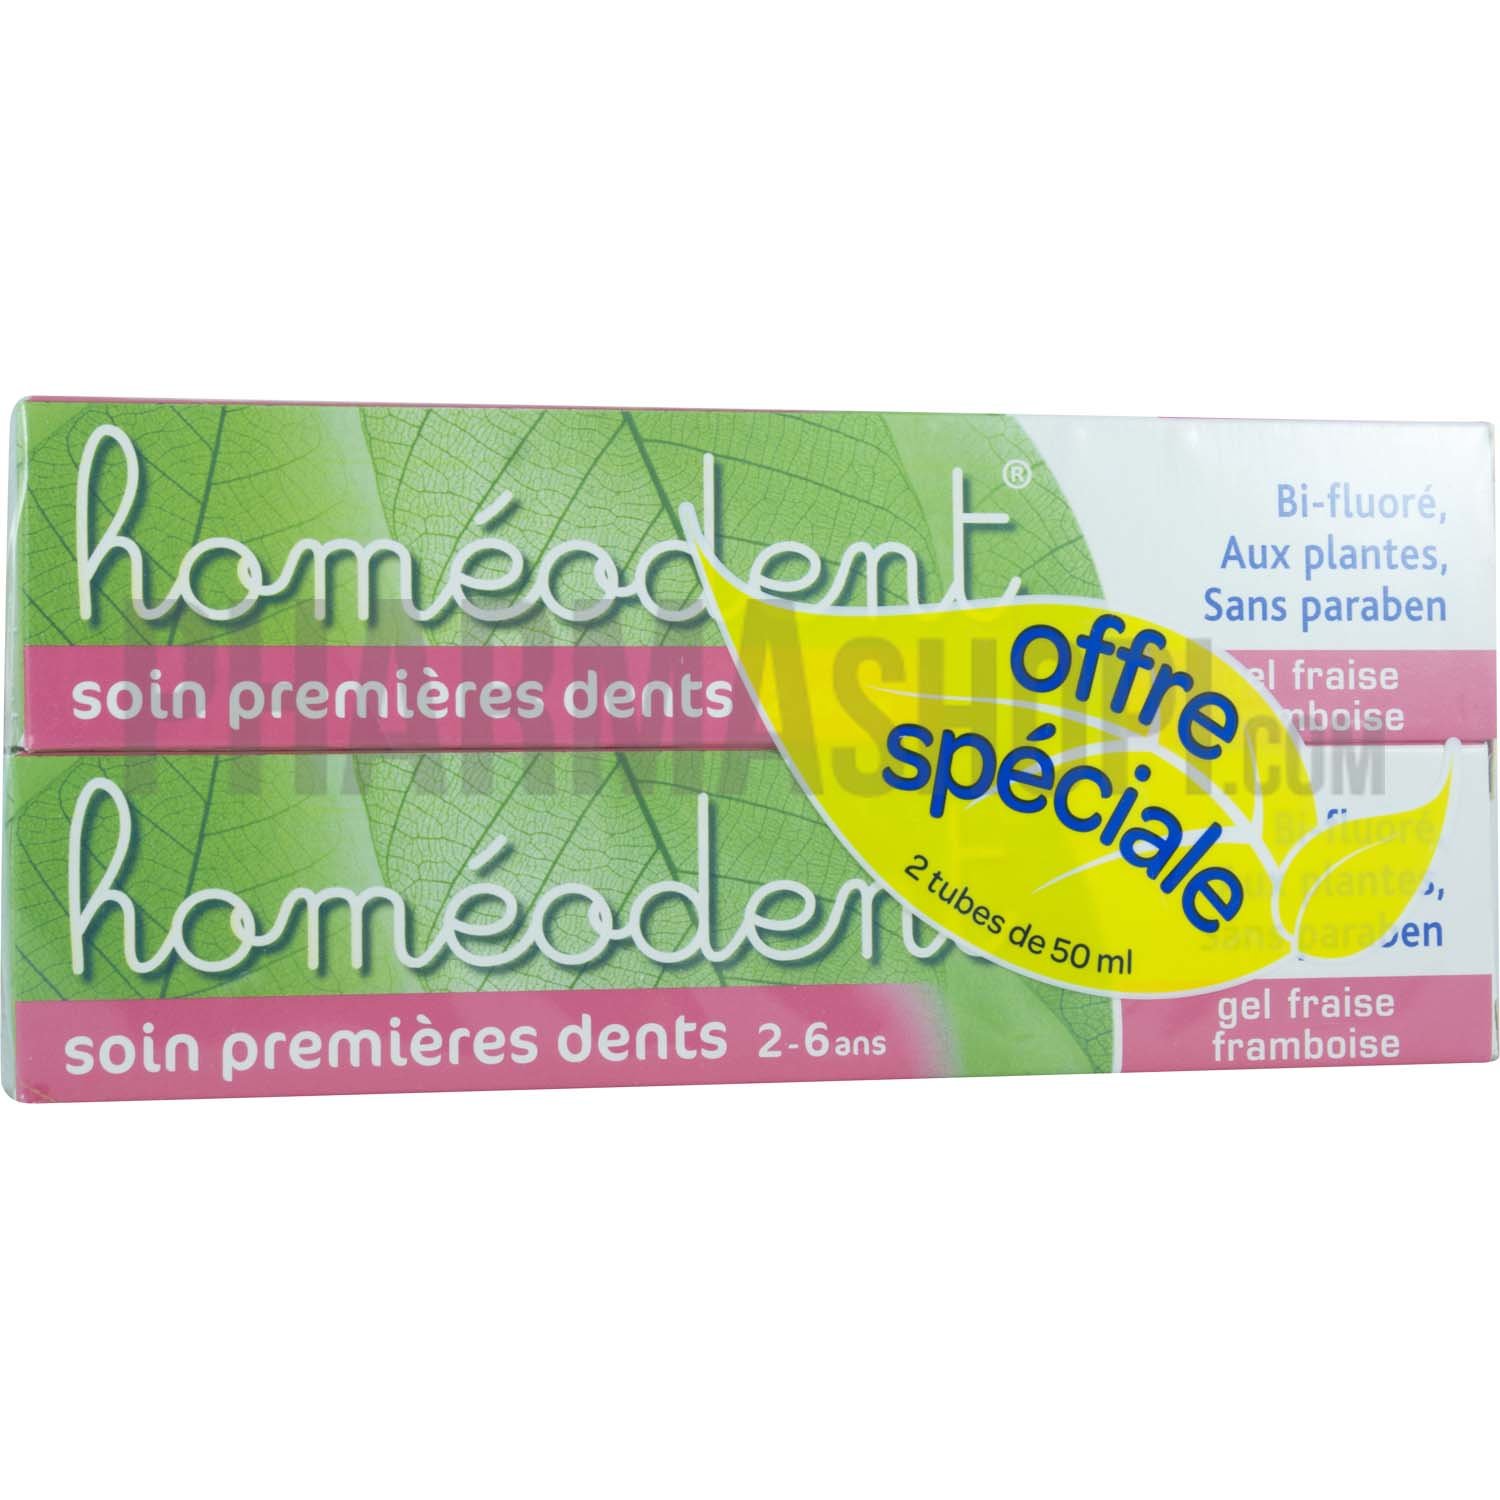 Homéodent soin premières dents 2-6 ans gel fraise framboise Boiron - 2 tubes de 50 ml